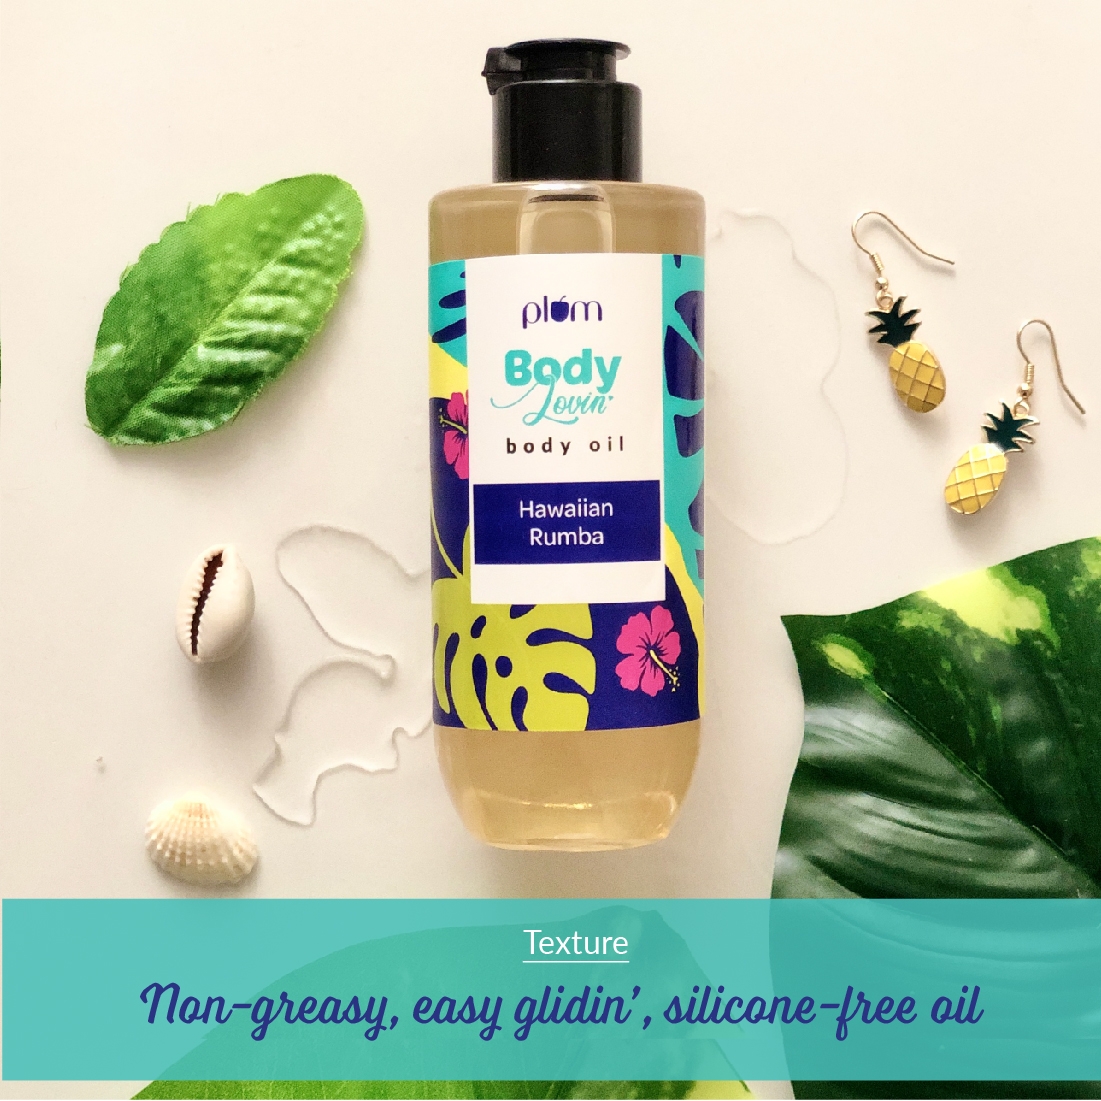 plum be good | Plum BodyLovin' Hawaiian Rumba Body Oil 2